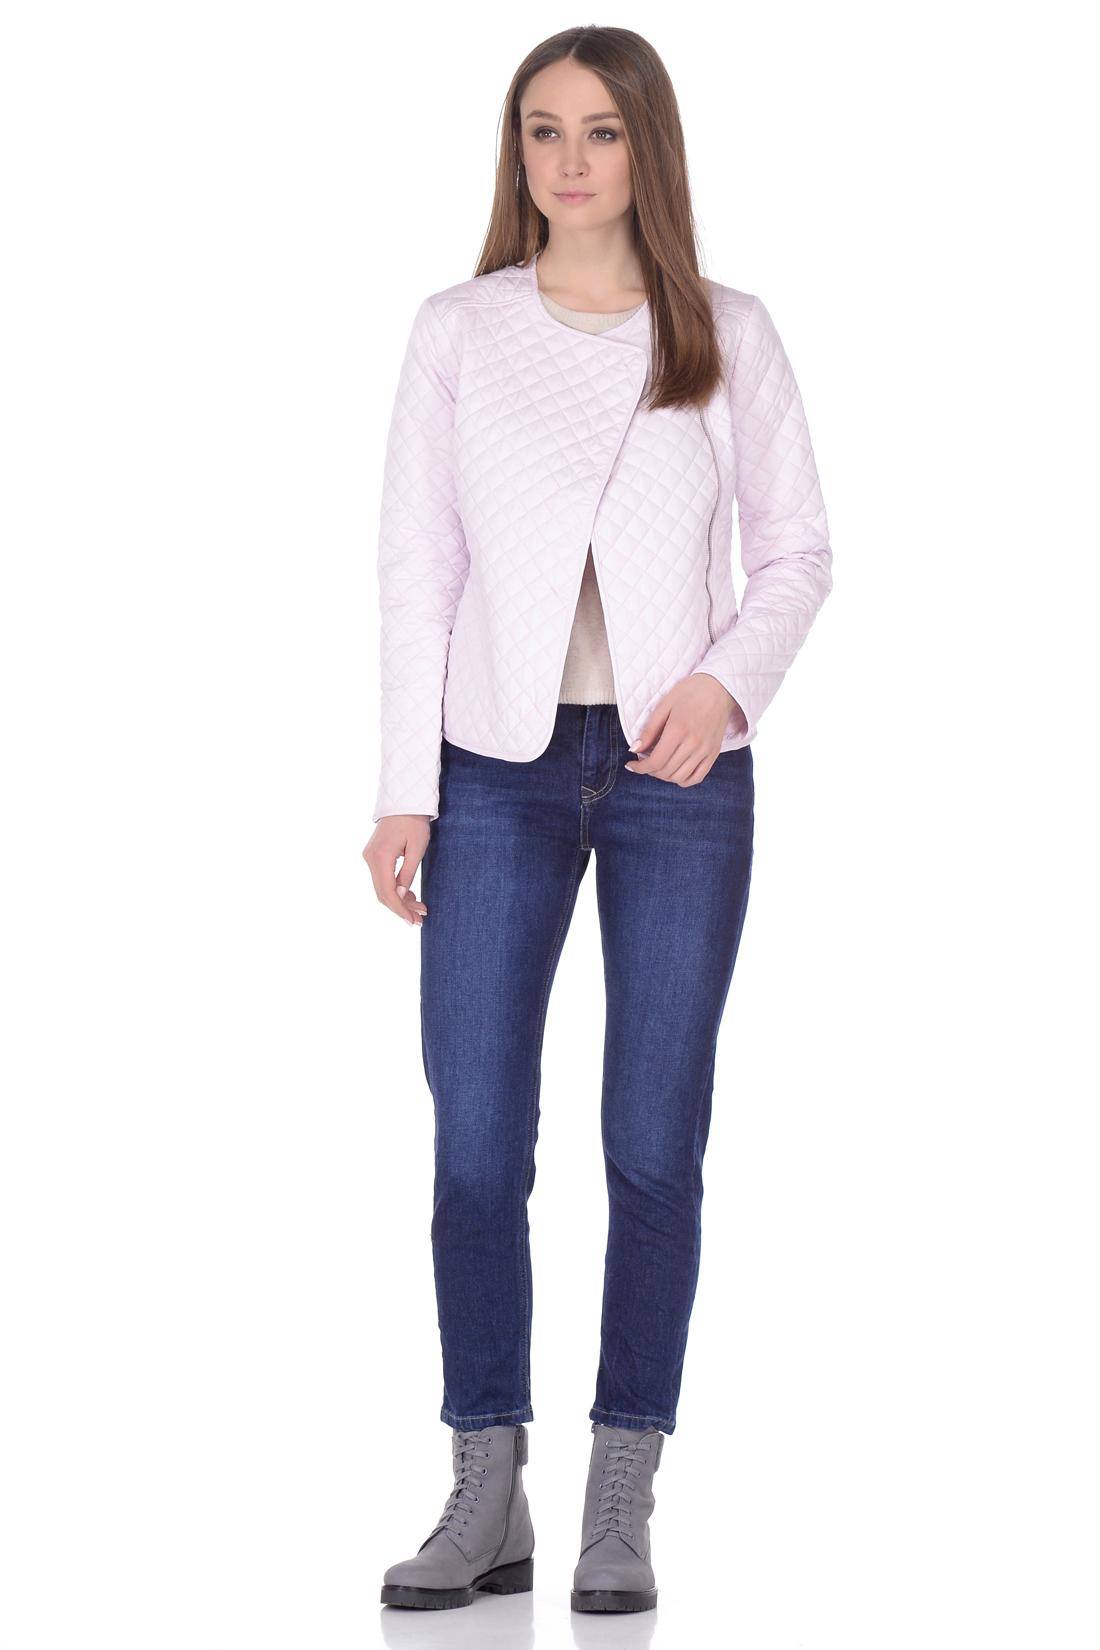 Стёганая куртка-косуха (арт. baon B038005), размер XL, цвет розовый Стёганая куртка-косуха (арт. baon B038005) - фото 5